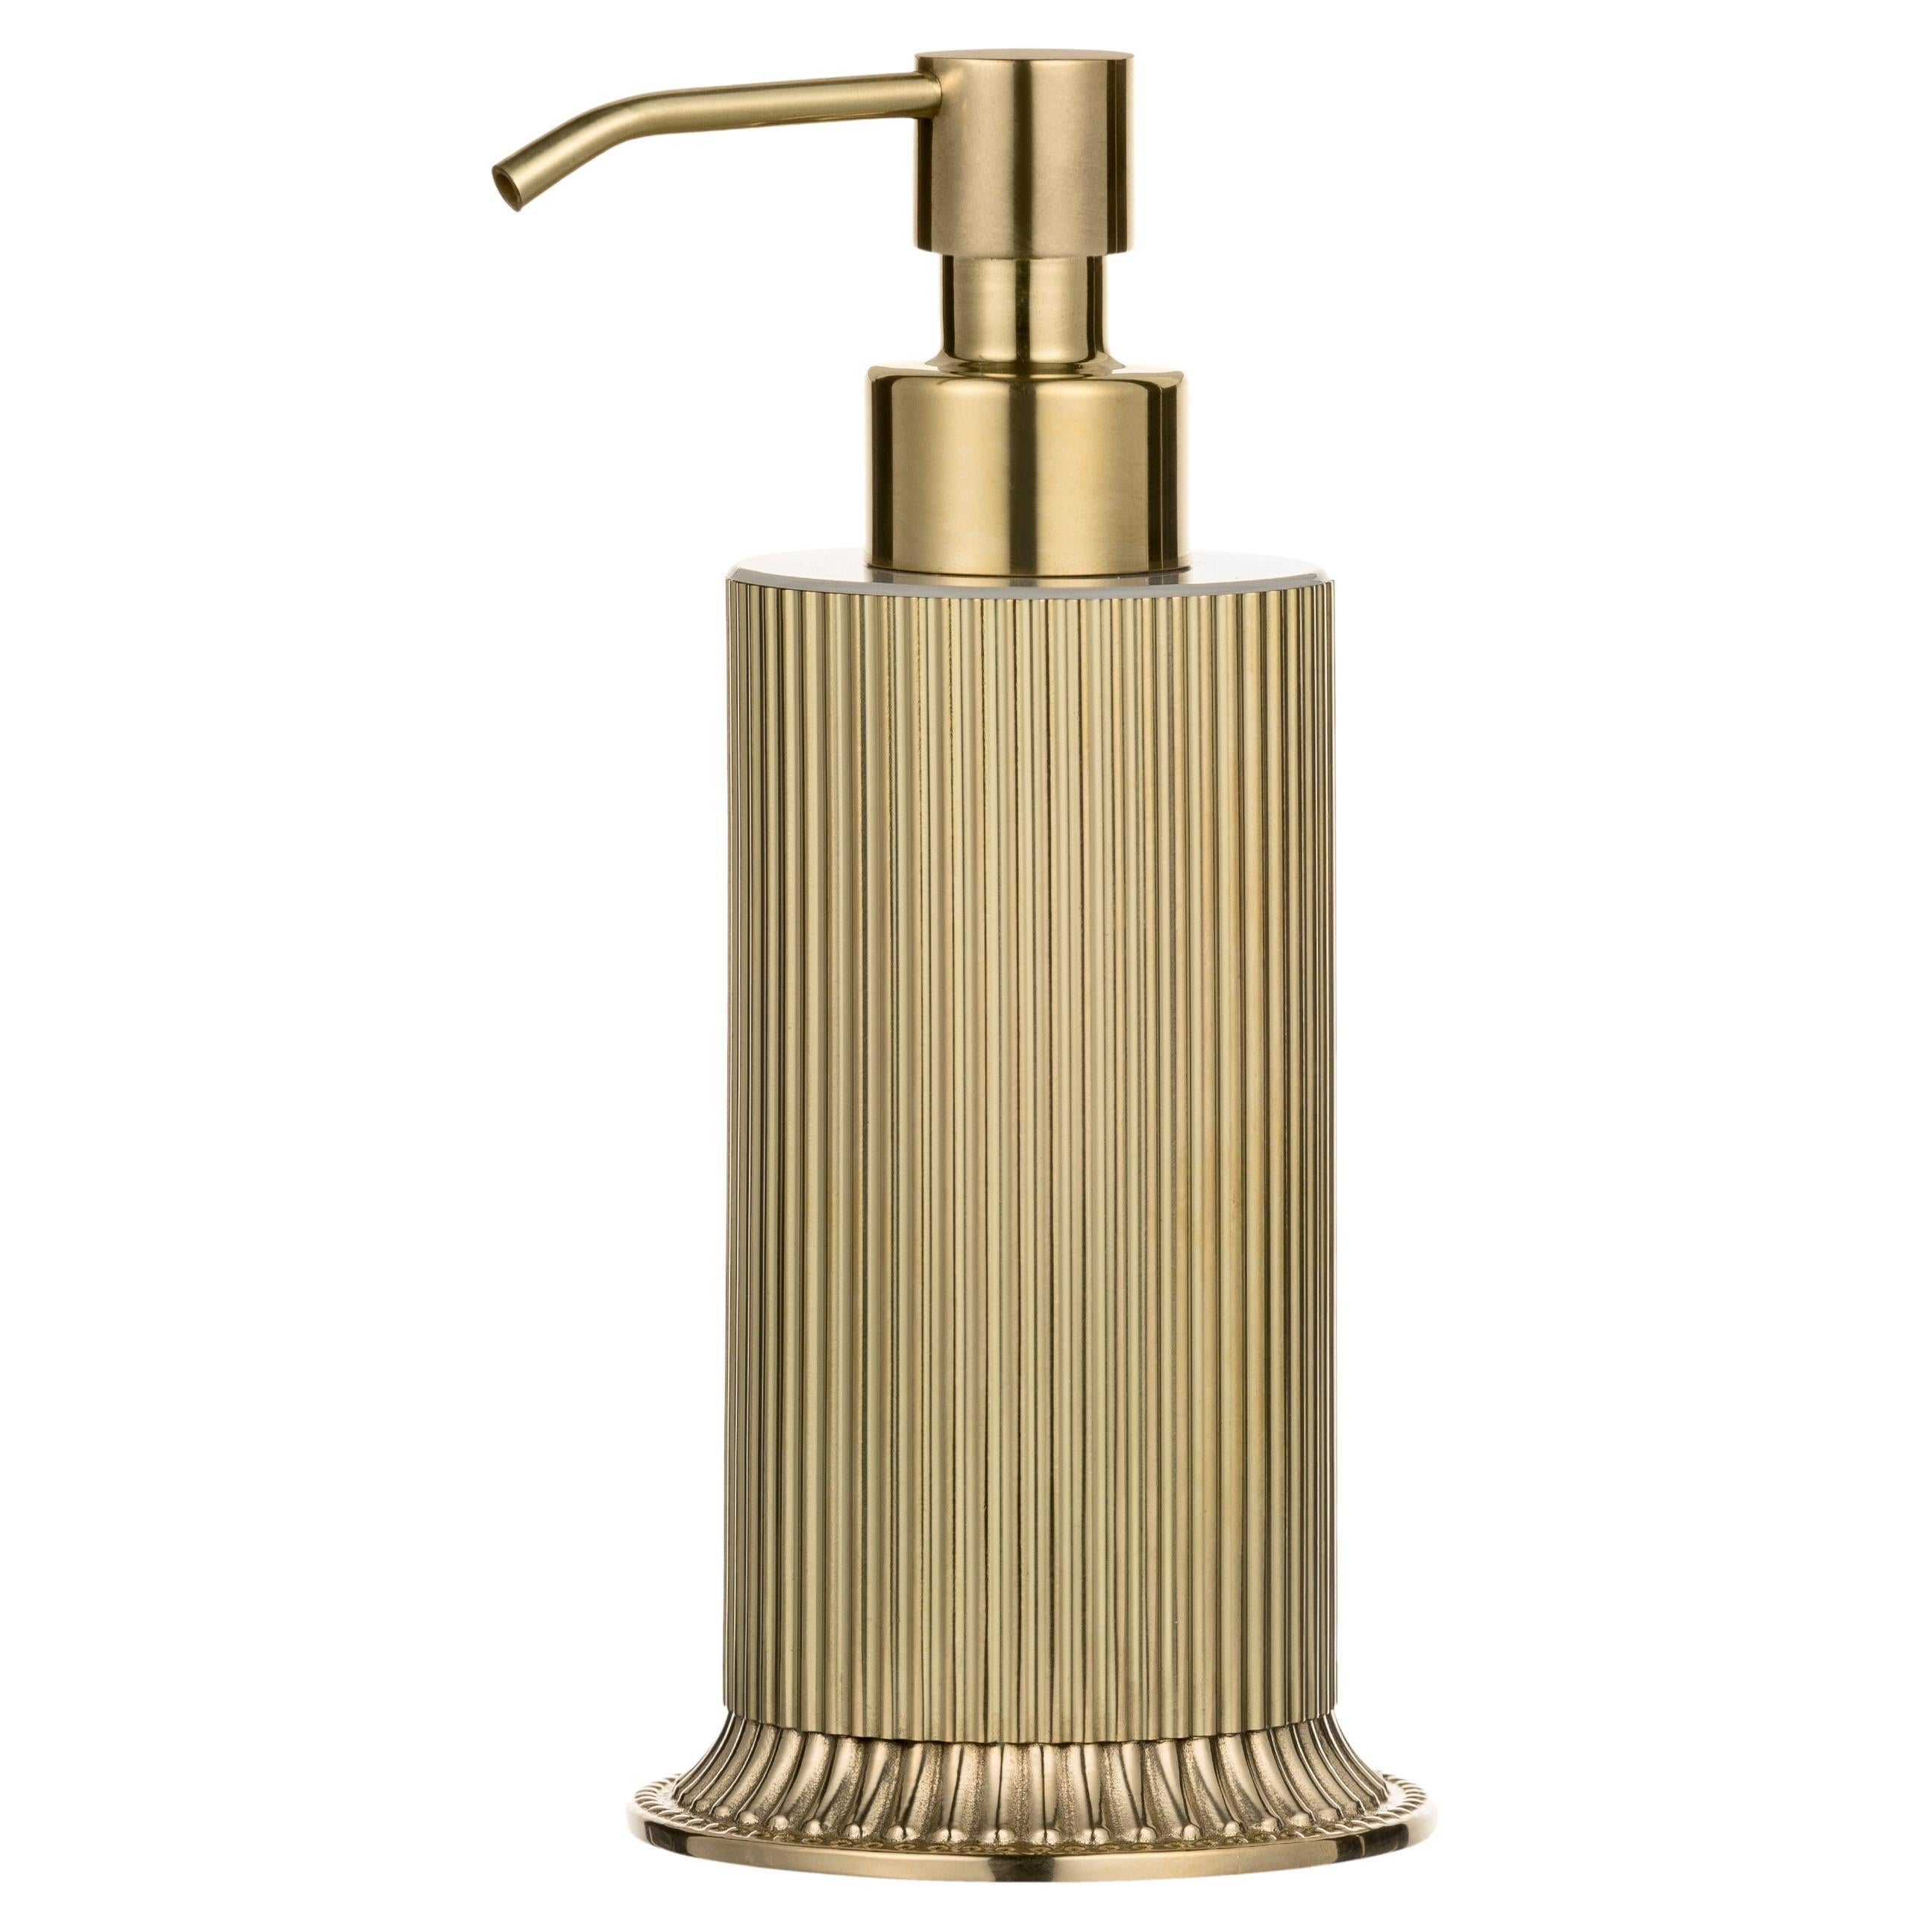 Striped brass soap dispenser For Sale